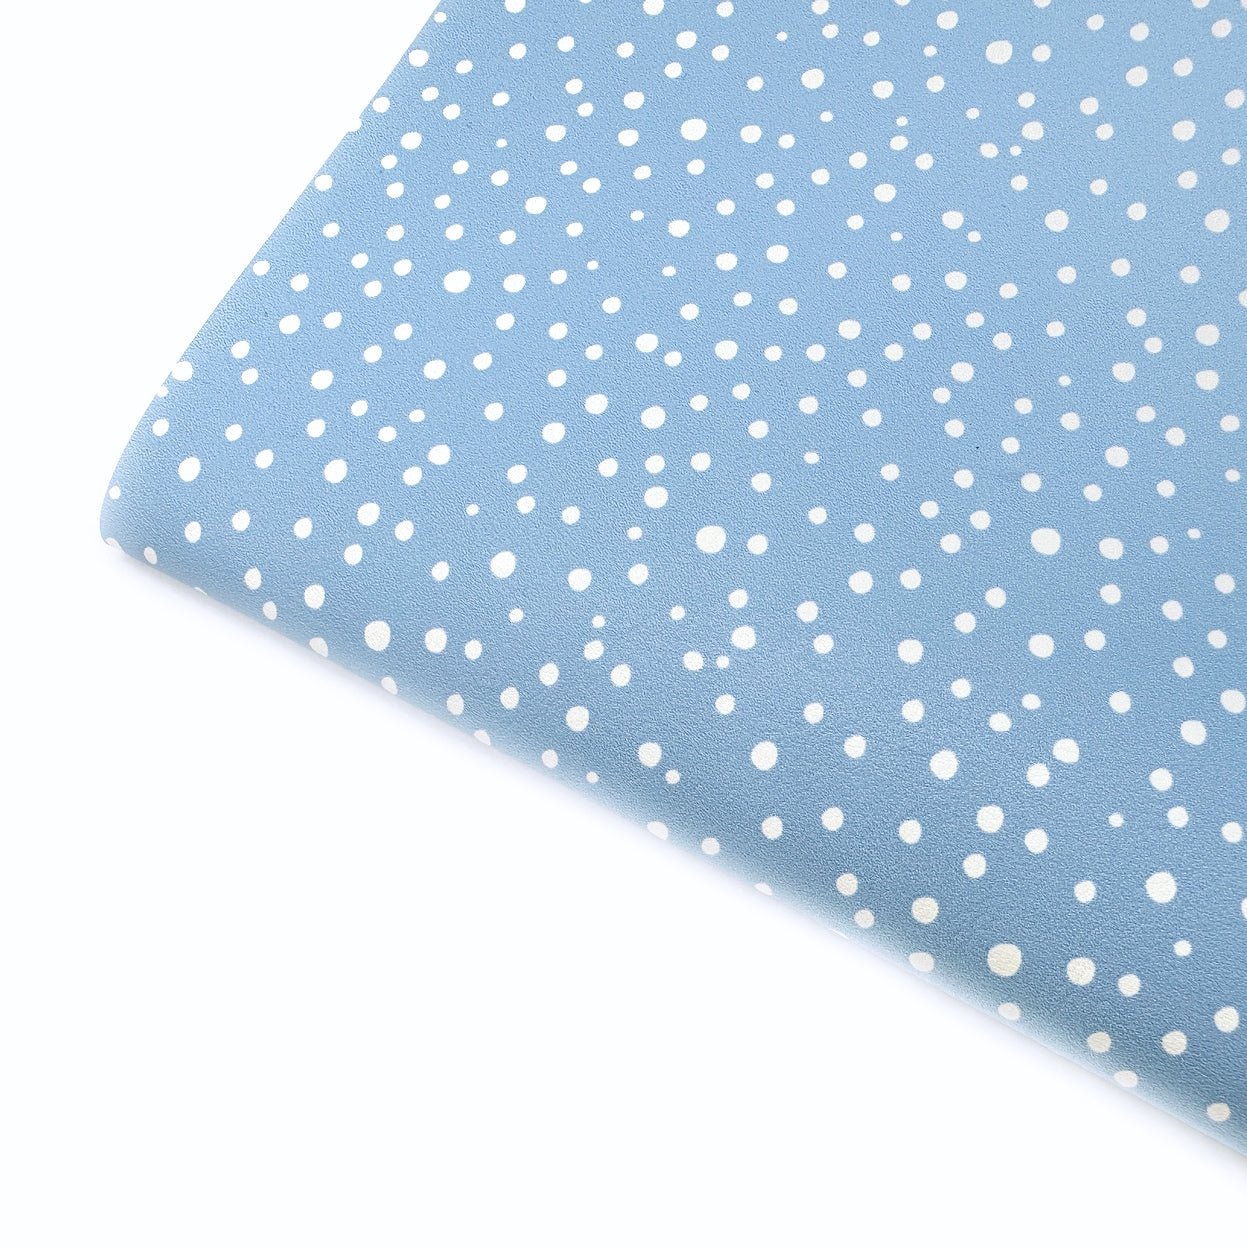 Blue Snow Drops Premium Faux Leather Fabric Sheets